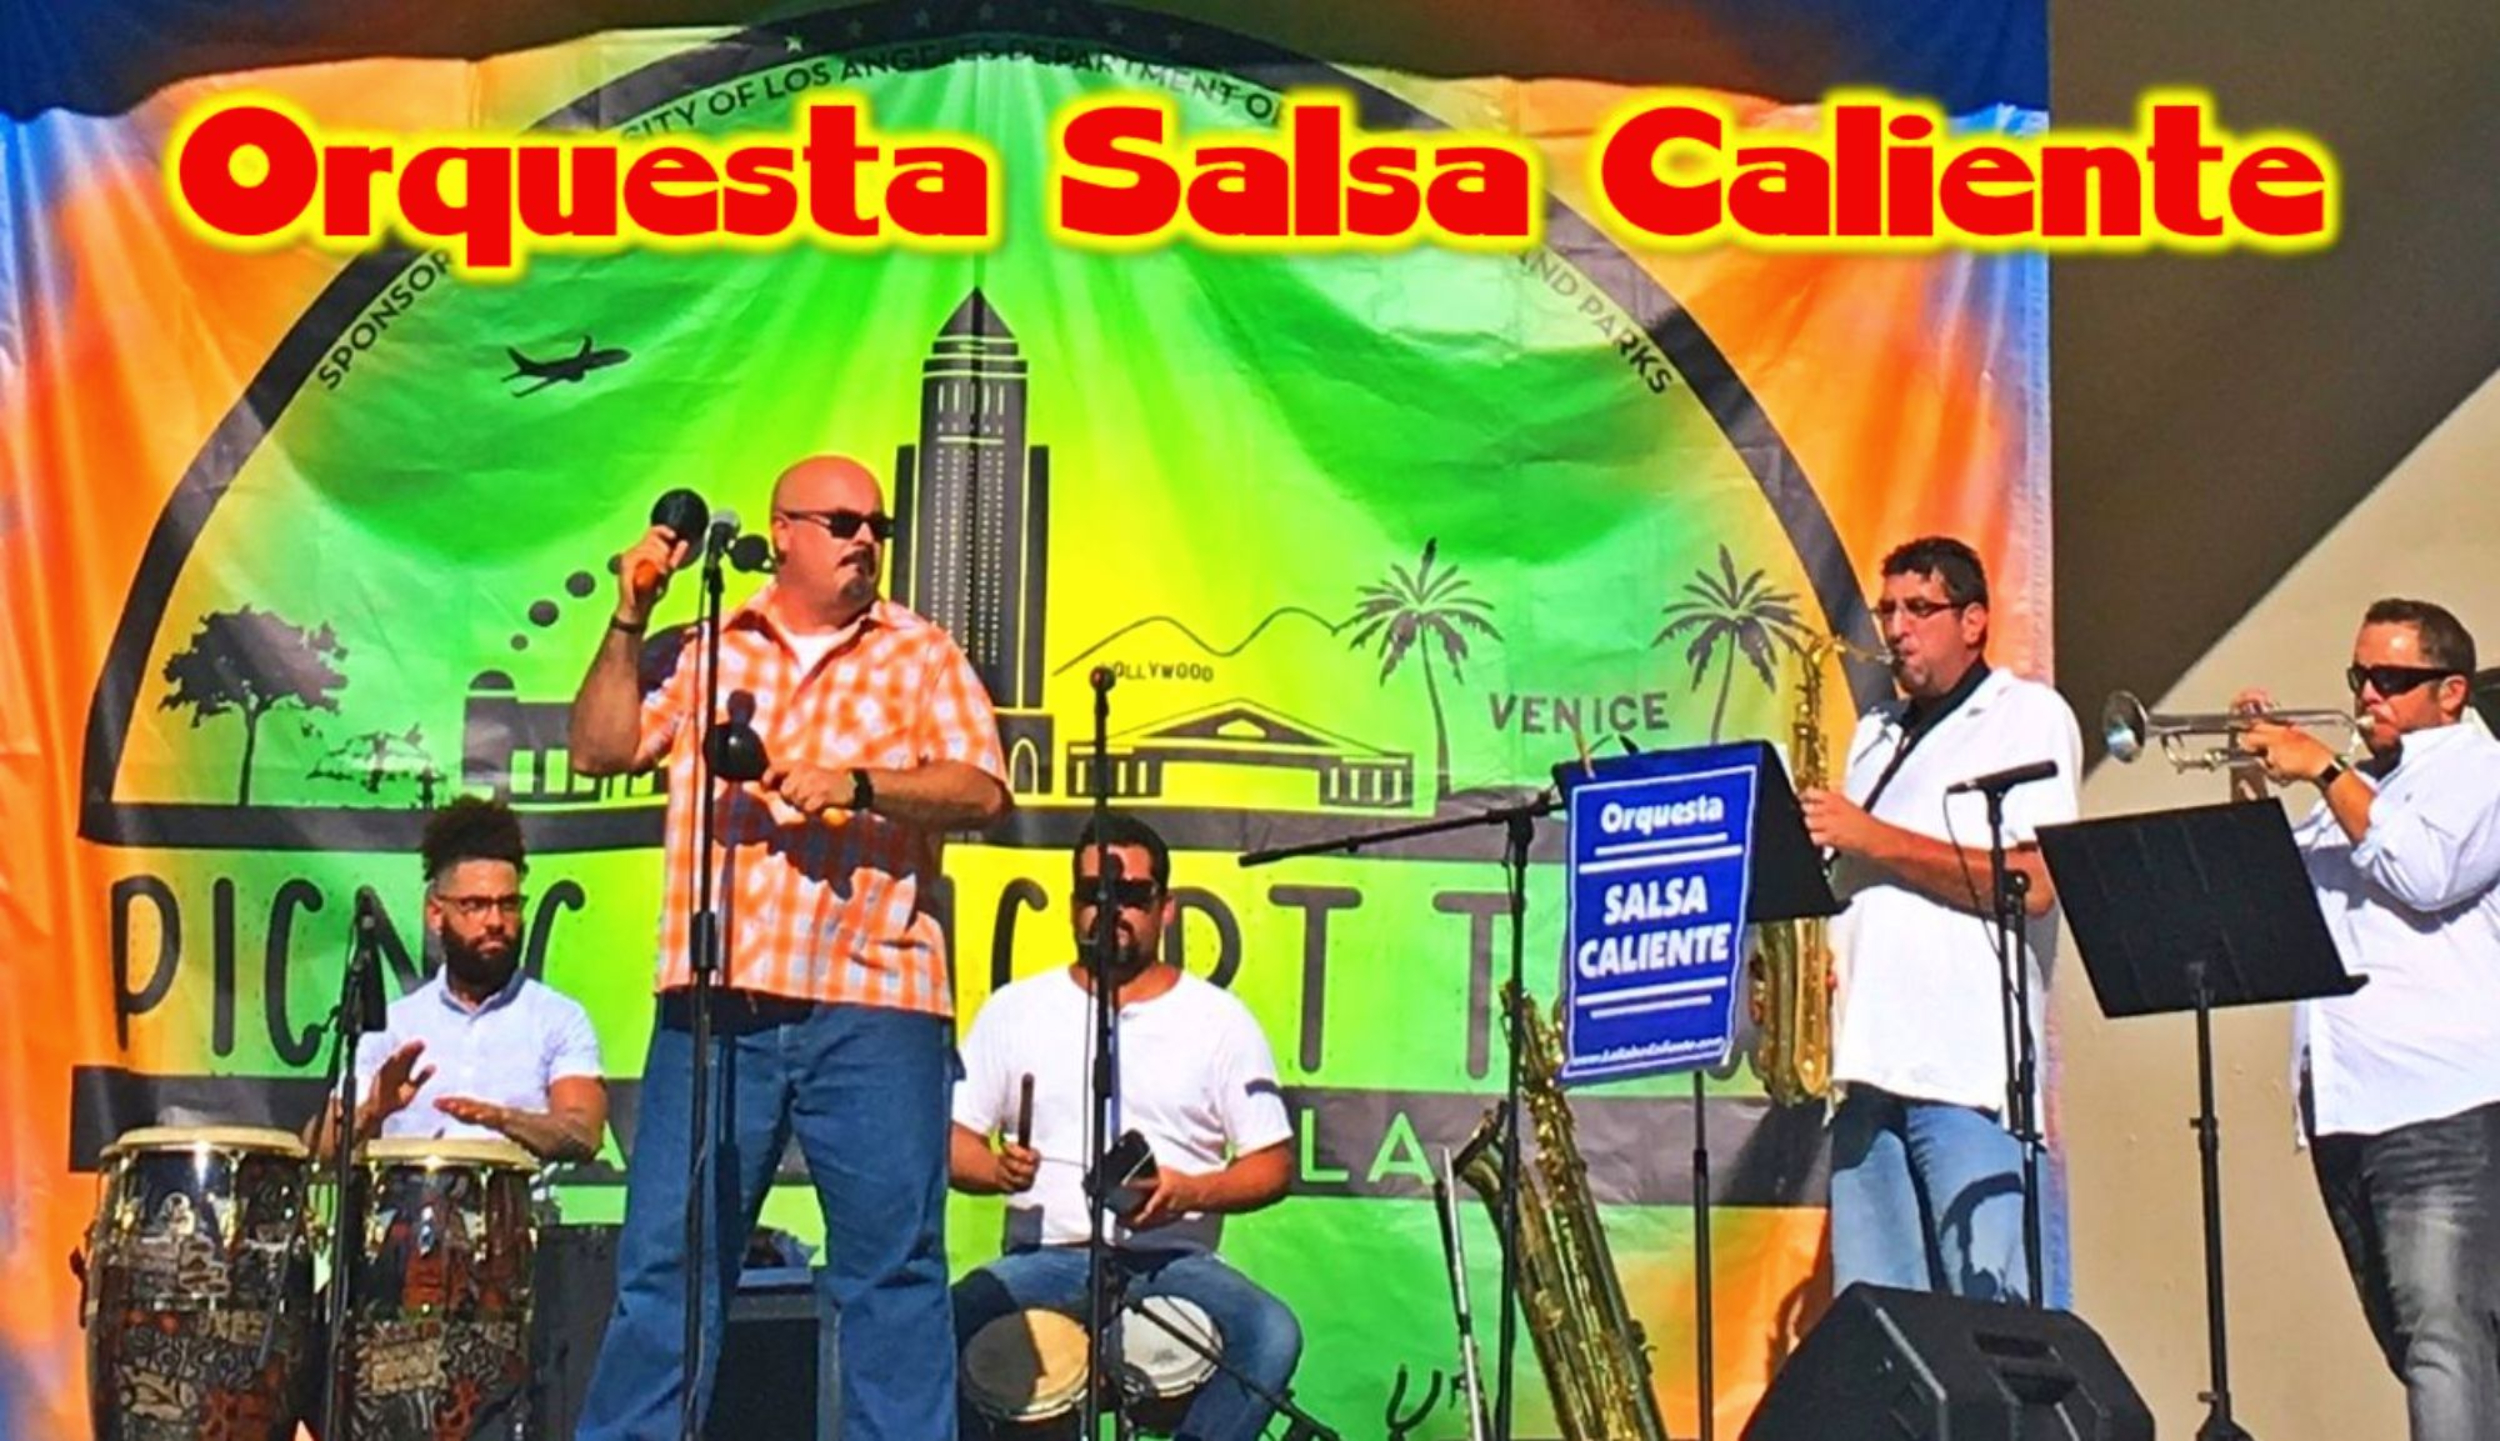 Salsa Caliente - Promo Photo 1 (1)